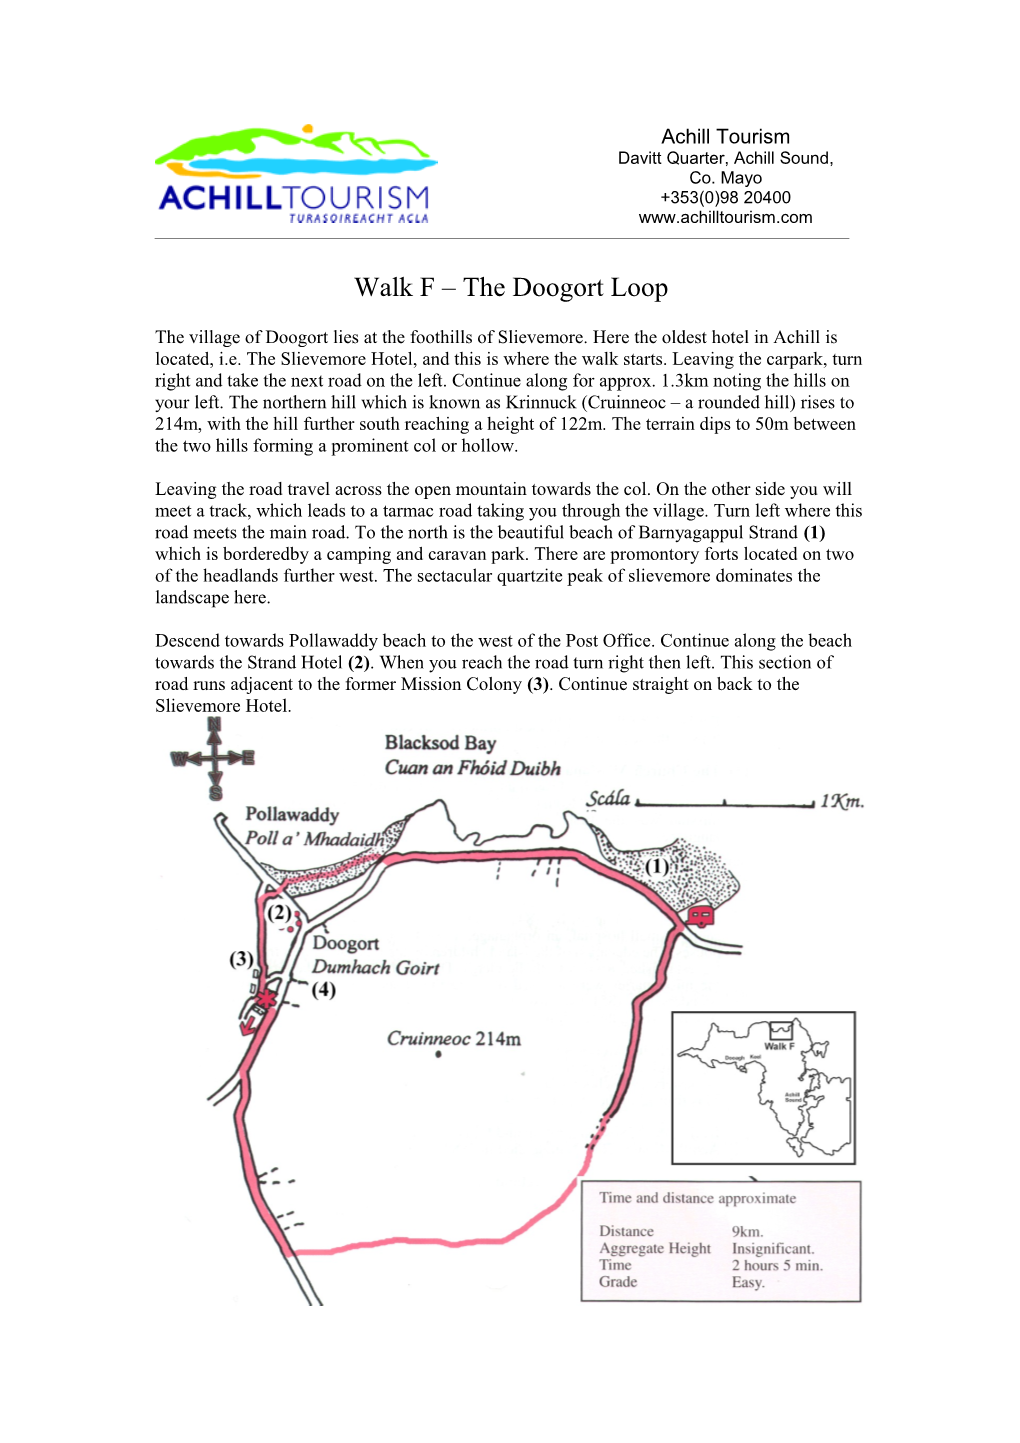 Walk F – the Doogort Loop